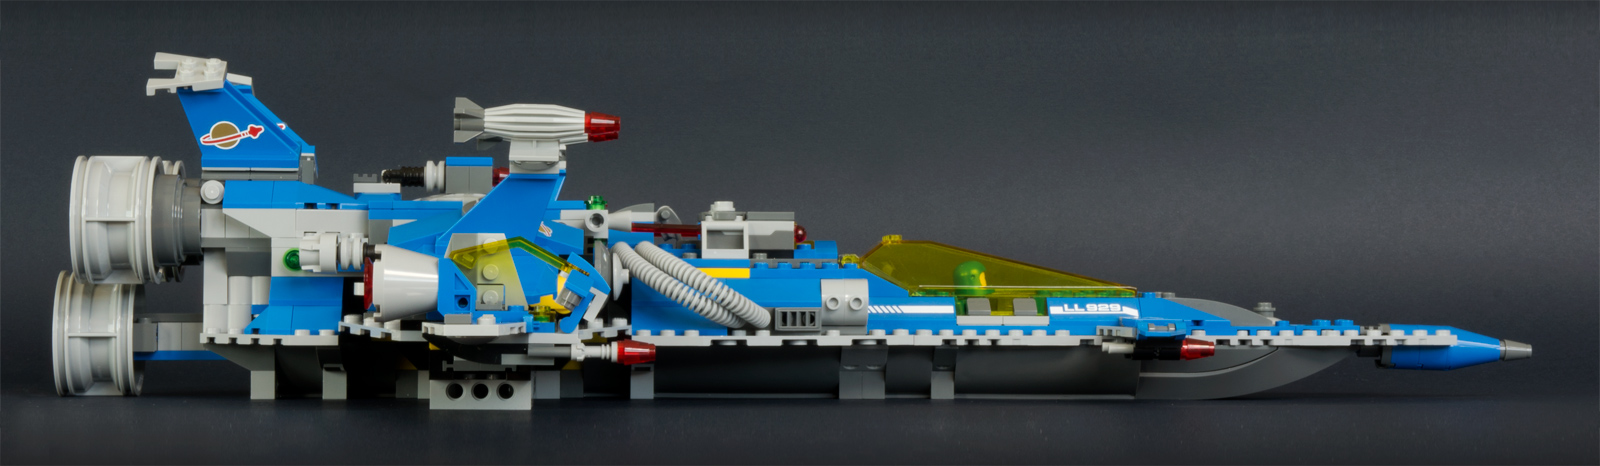 lego-benny-spaceship-side-view-70816.jpg